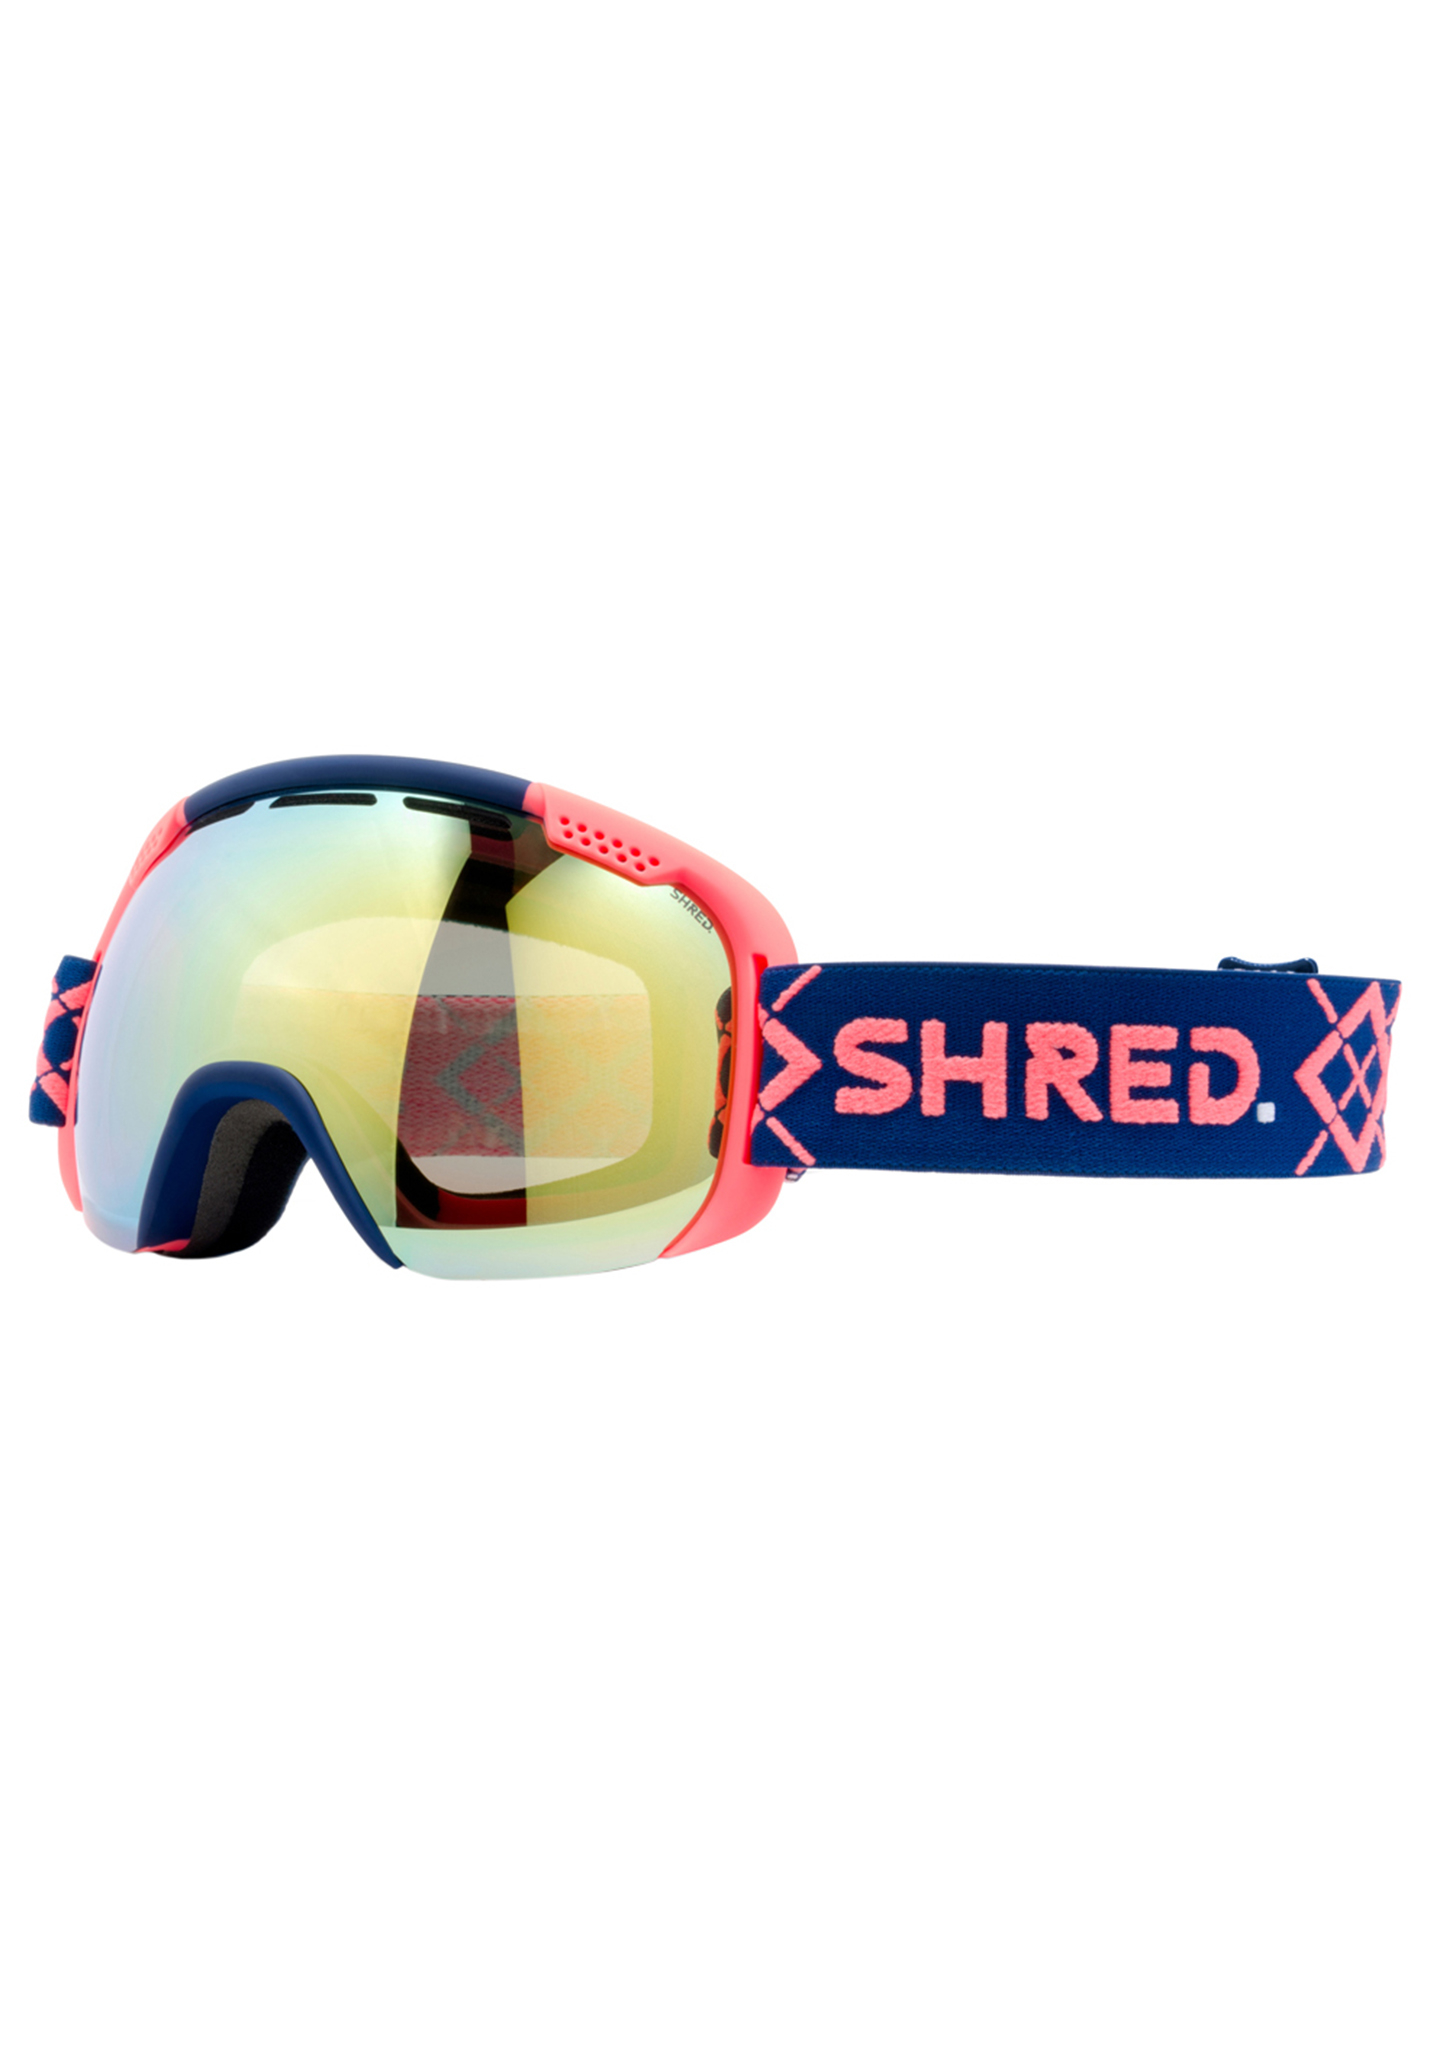 Shred Smartefy Snowboardbrillen bigshow navy rost/cbl hero spiegel One Size